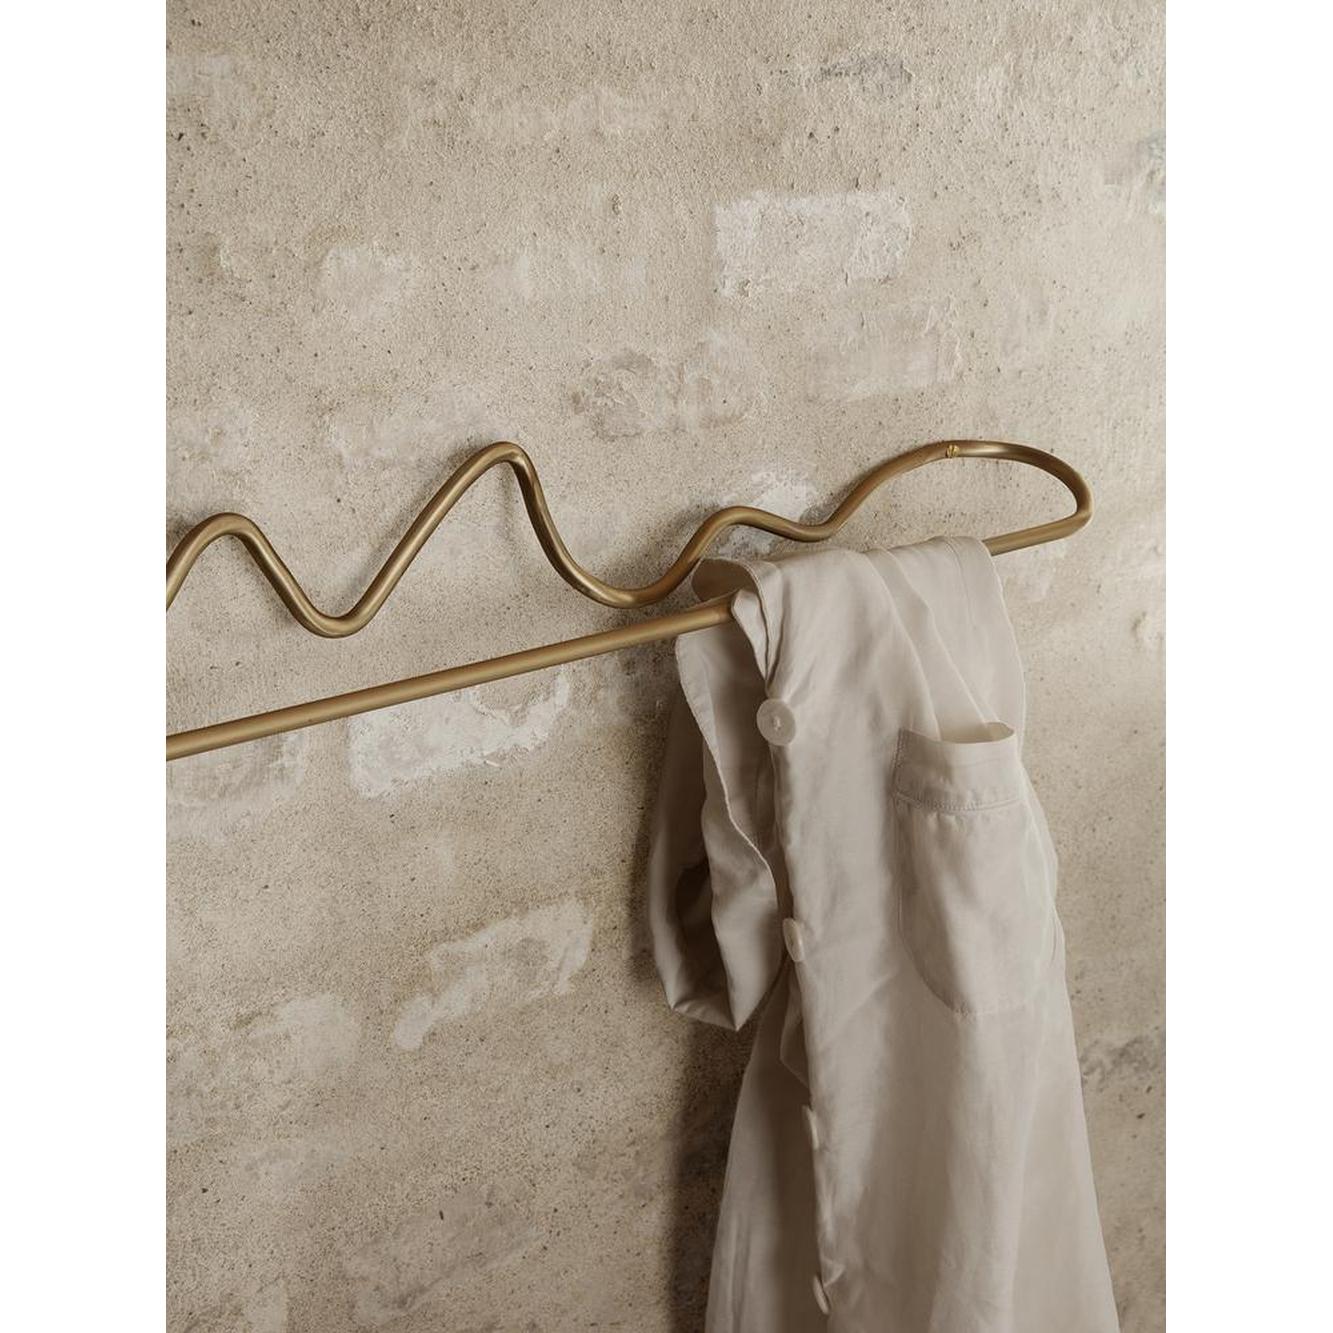 Ferm Living Curvature Towel Hanger